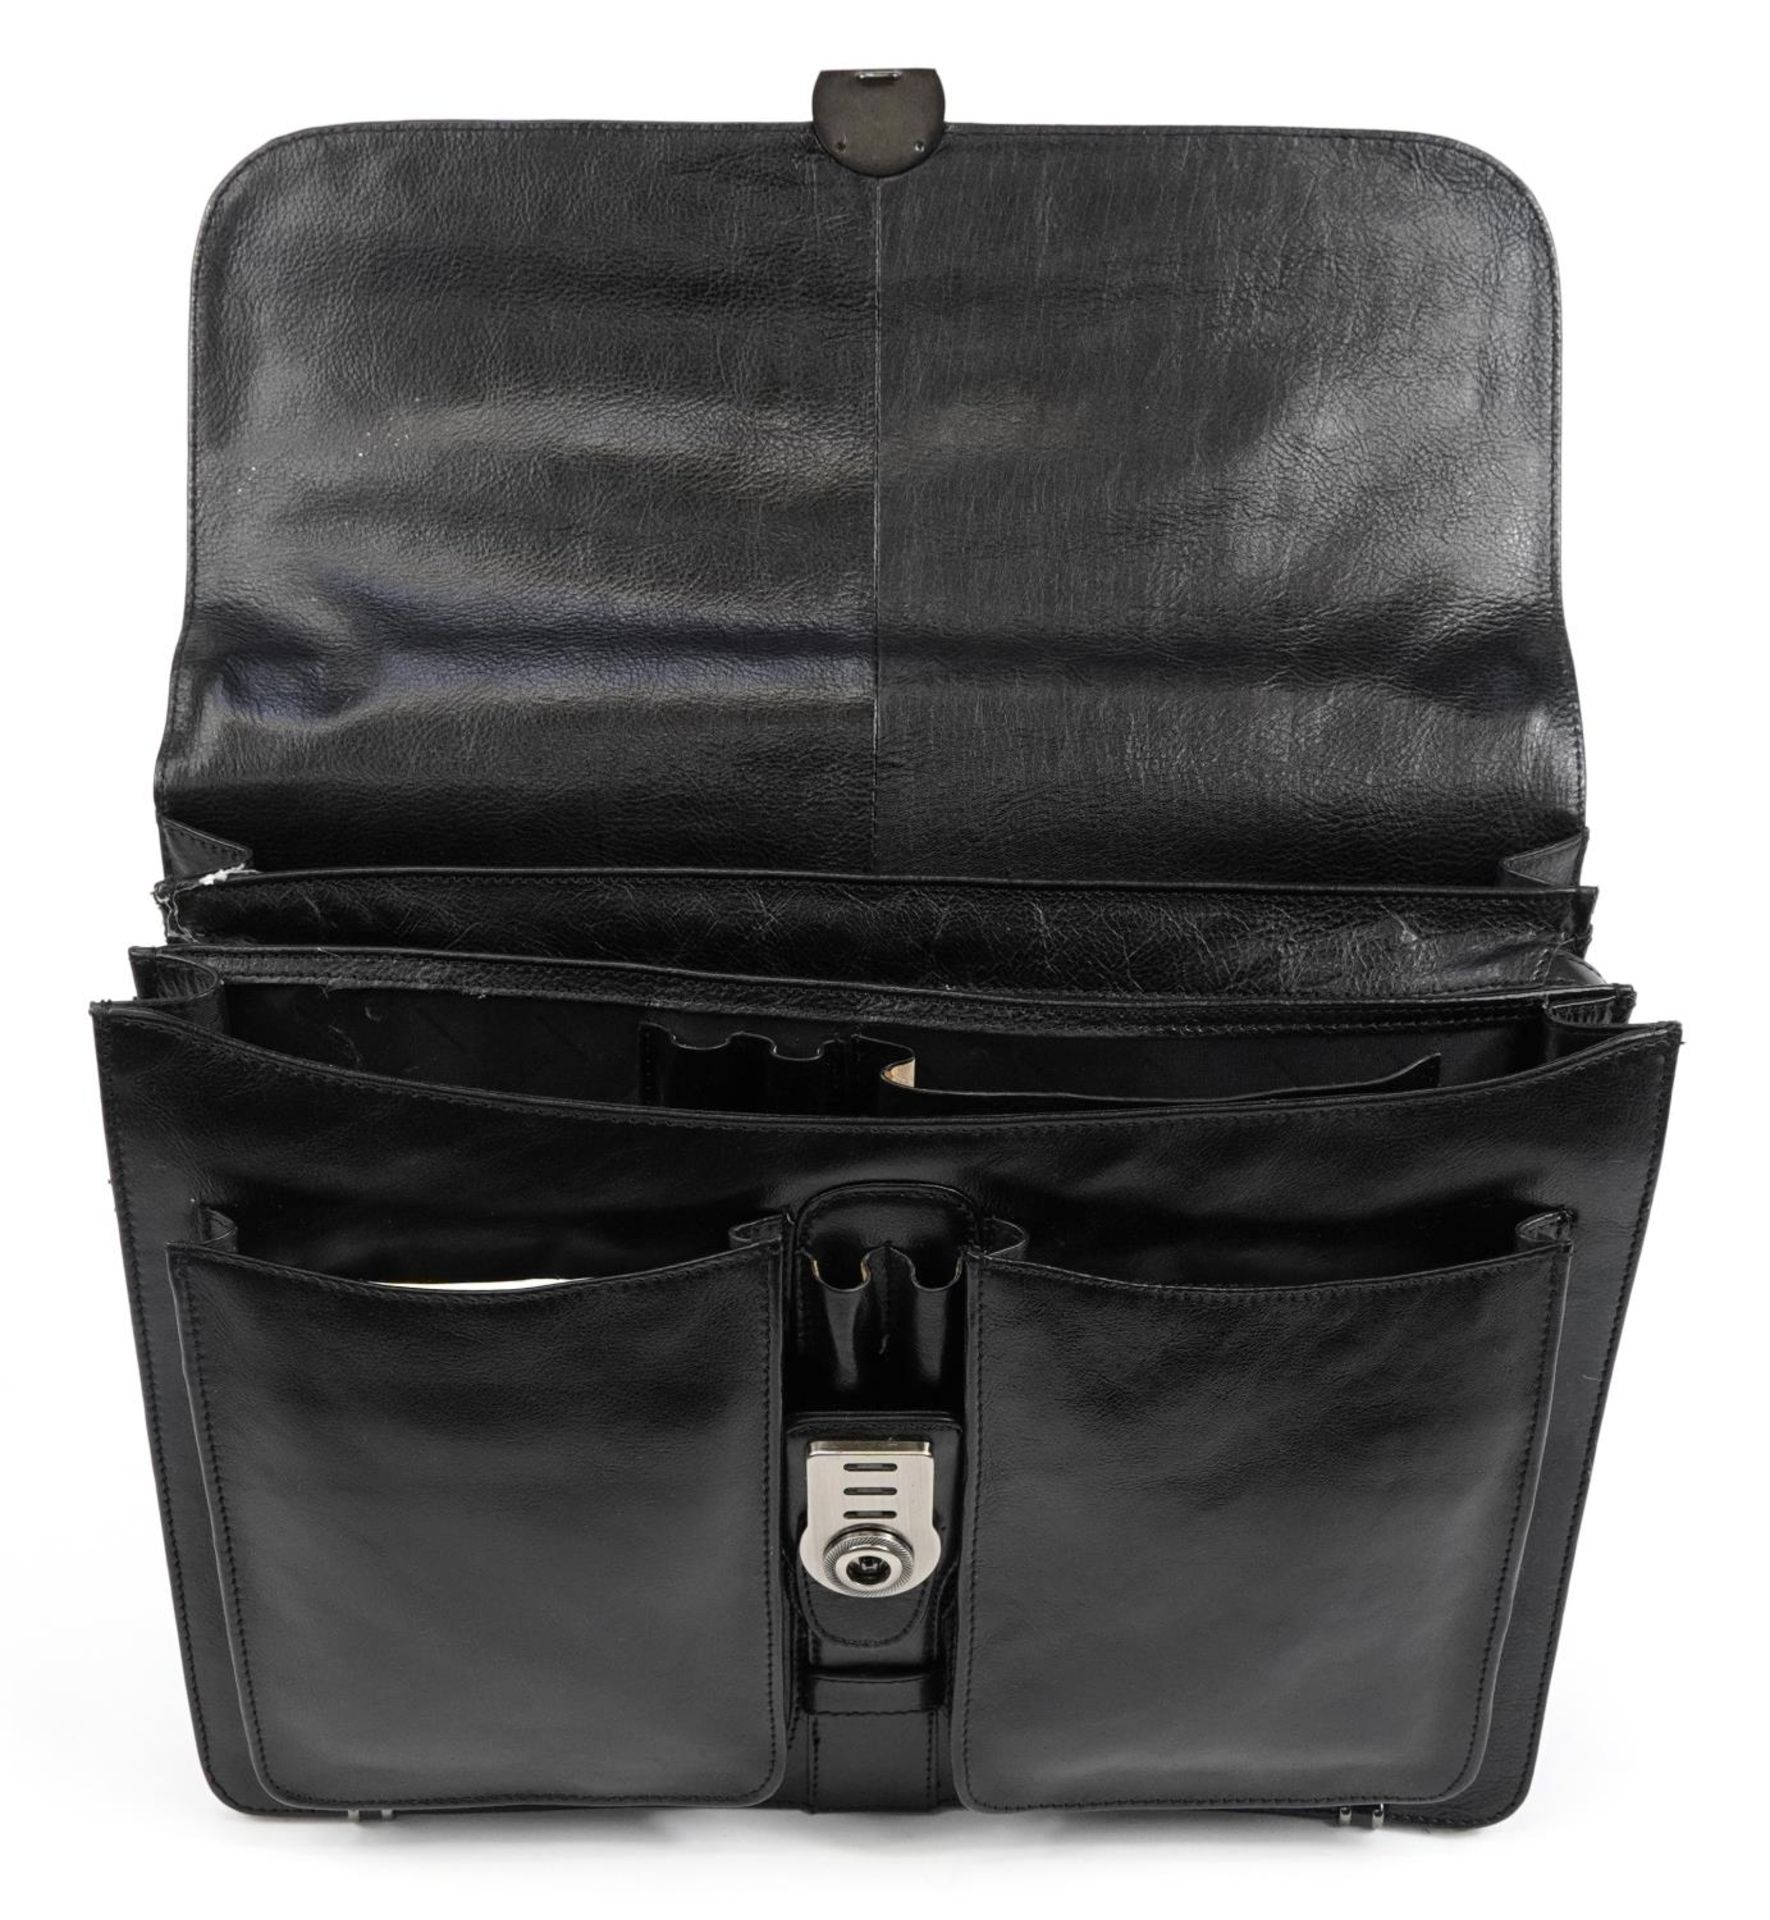 S Babila, Italian black leather briefcase bag, 42cm wide - Image 2 of 5